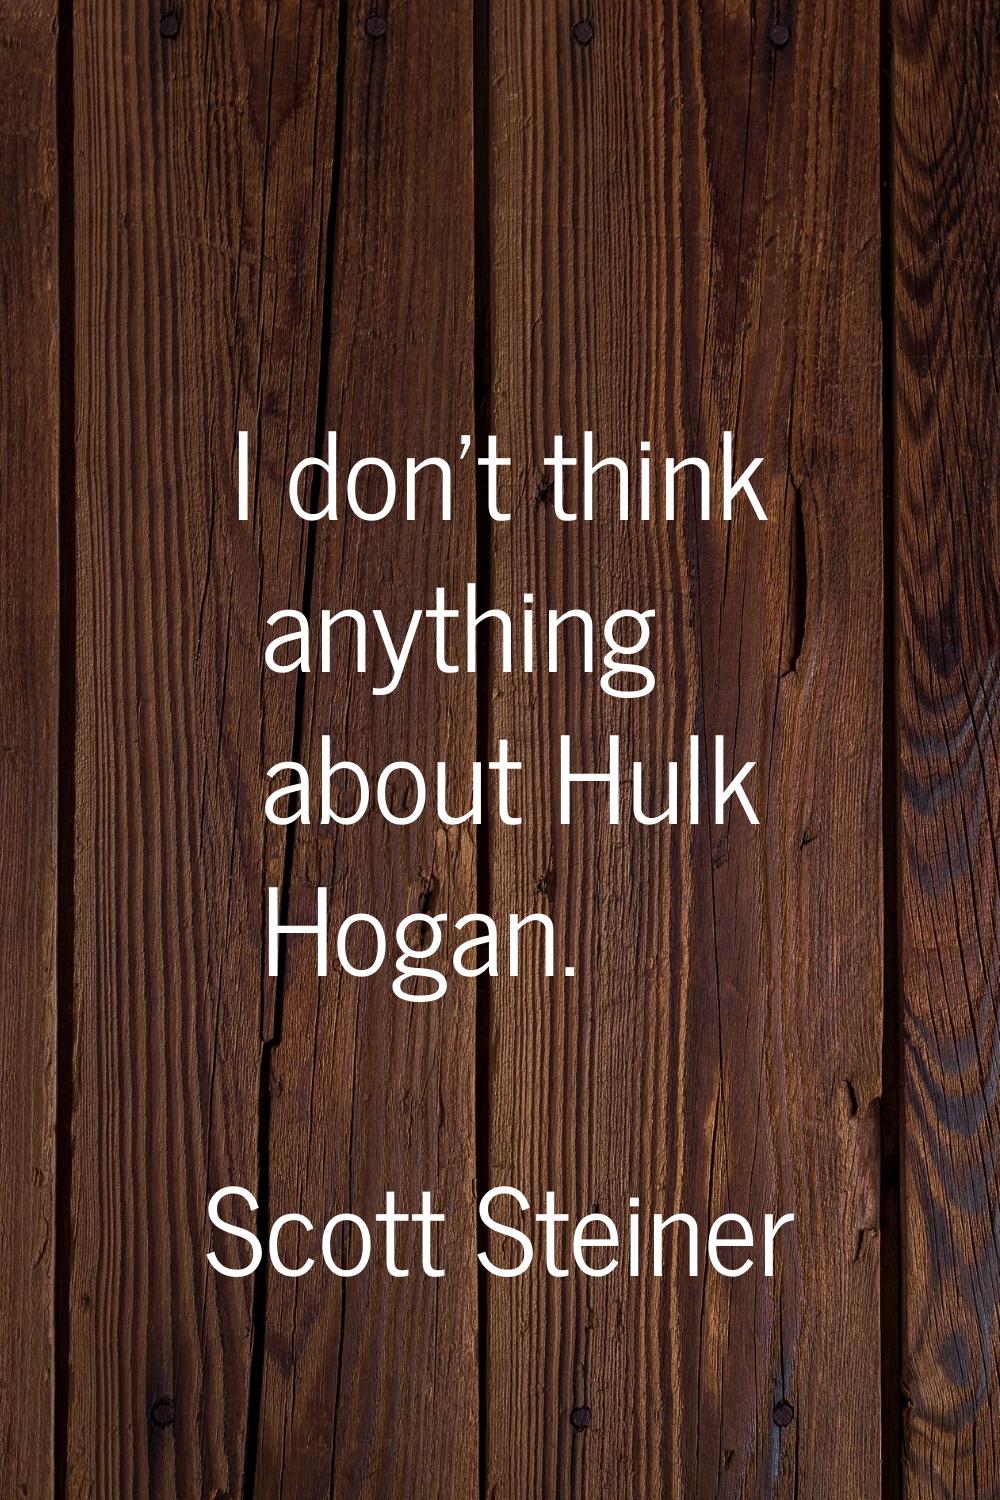 I don't think anything about Hulk Hogan.